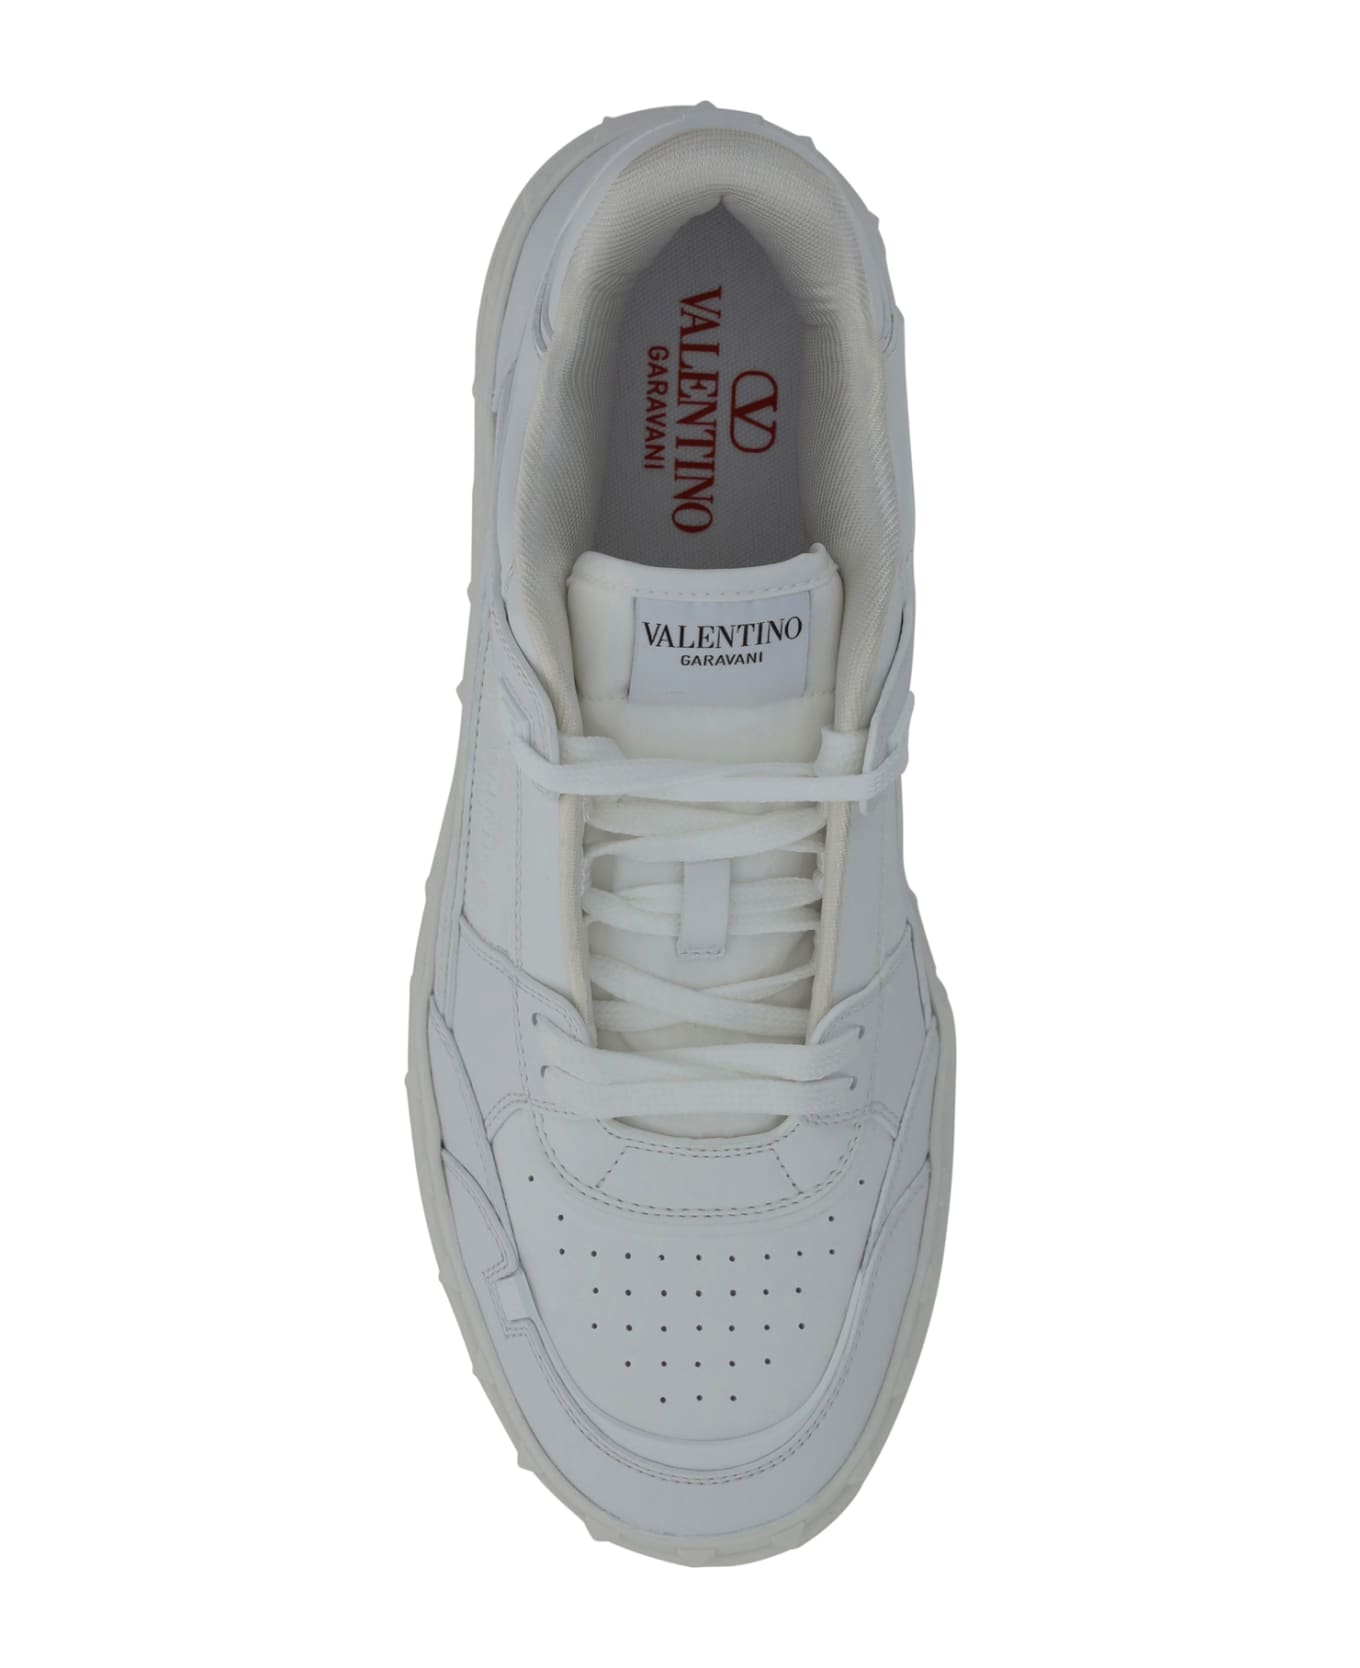 Valentino Garavani Freedots Sneakers - White